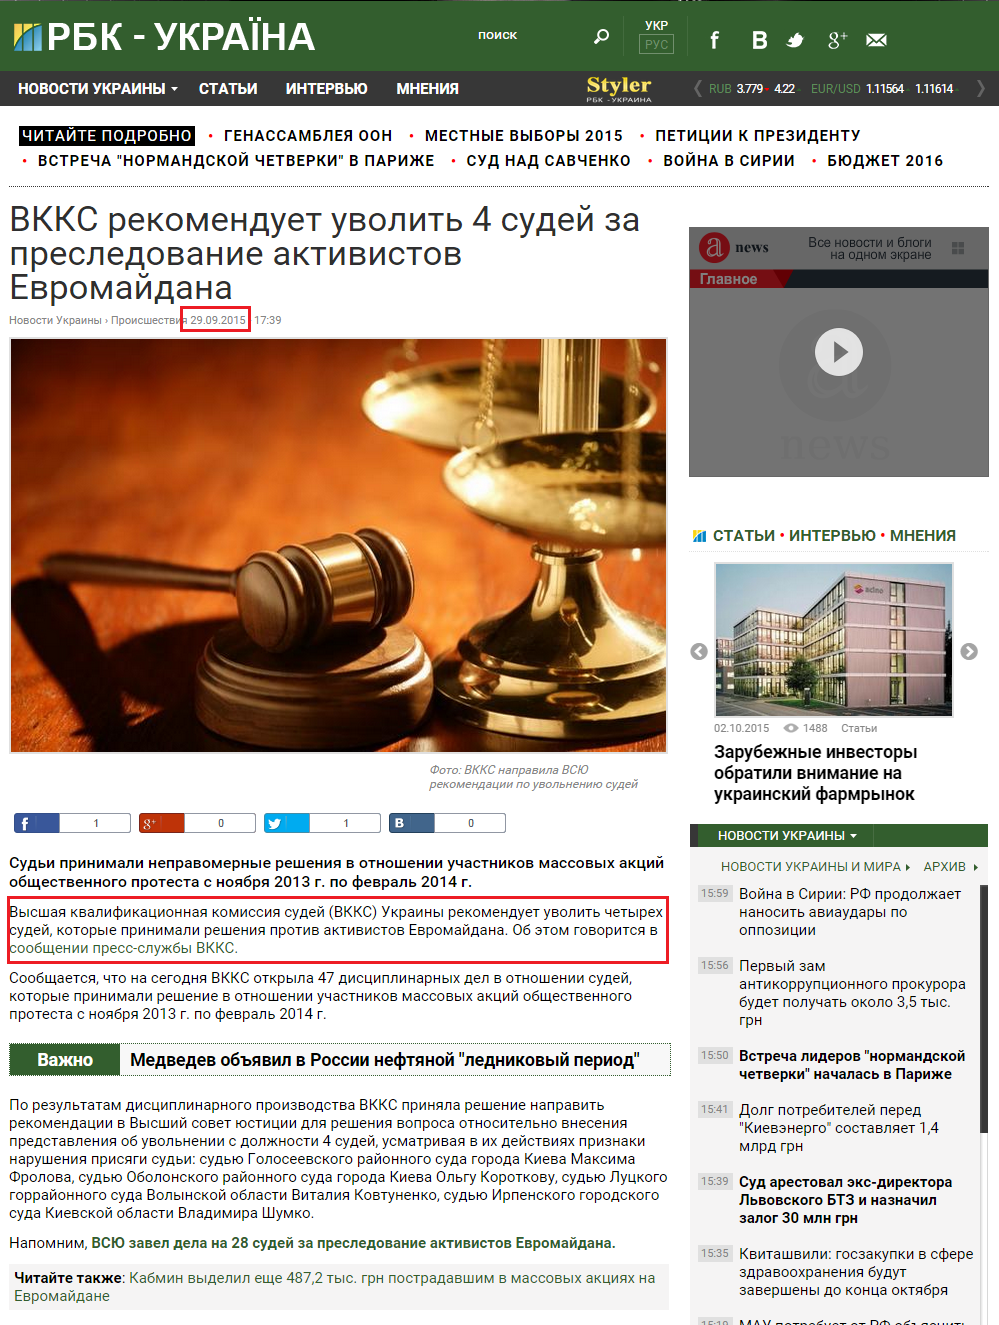 http://www.rbc.ua/rus/news/vkks-rekomenduet-uvolit-sudey-presledovanie-1443537163.html